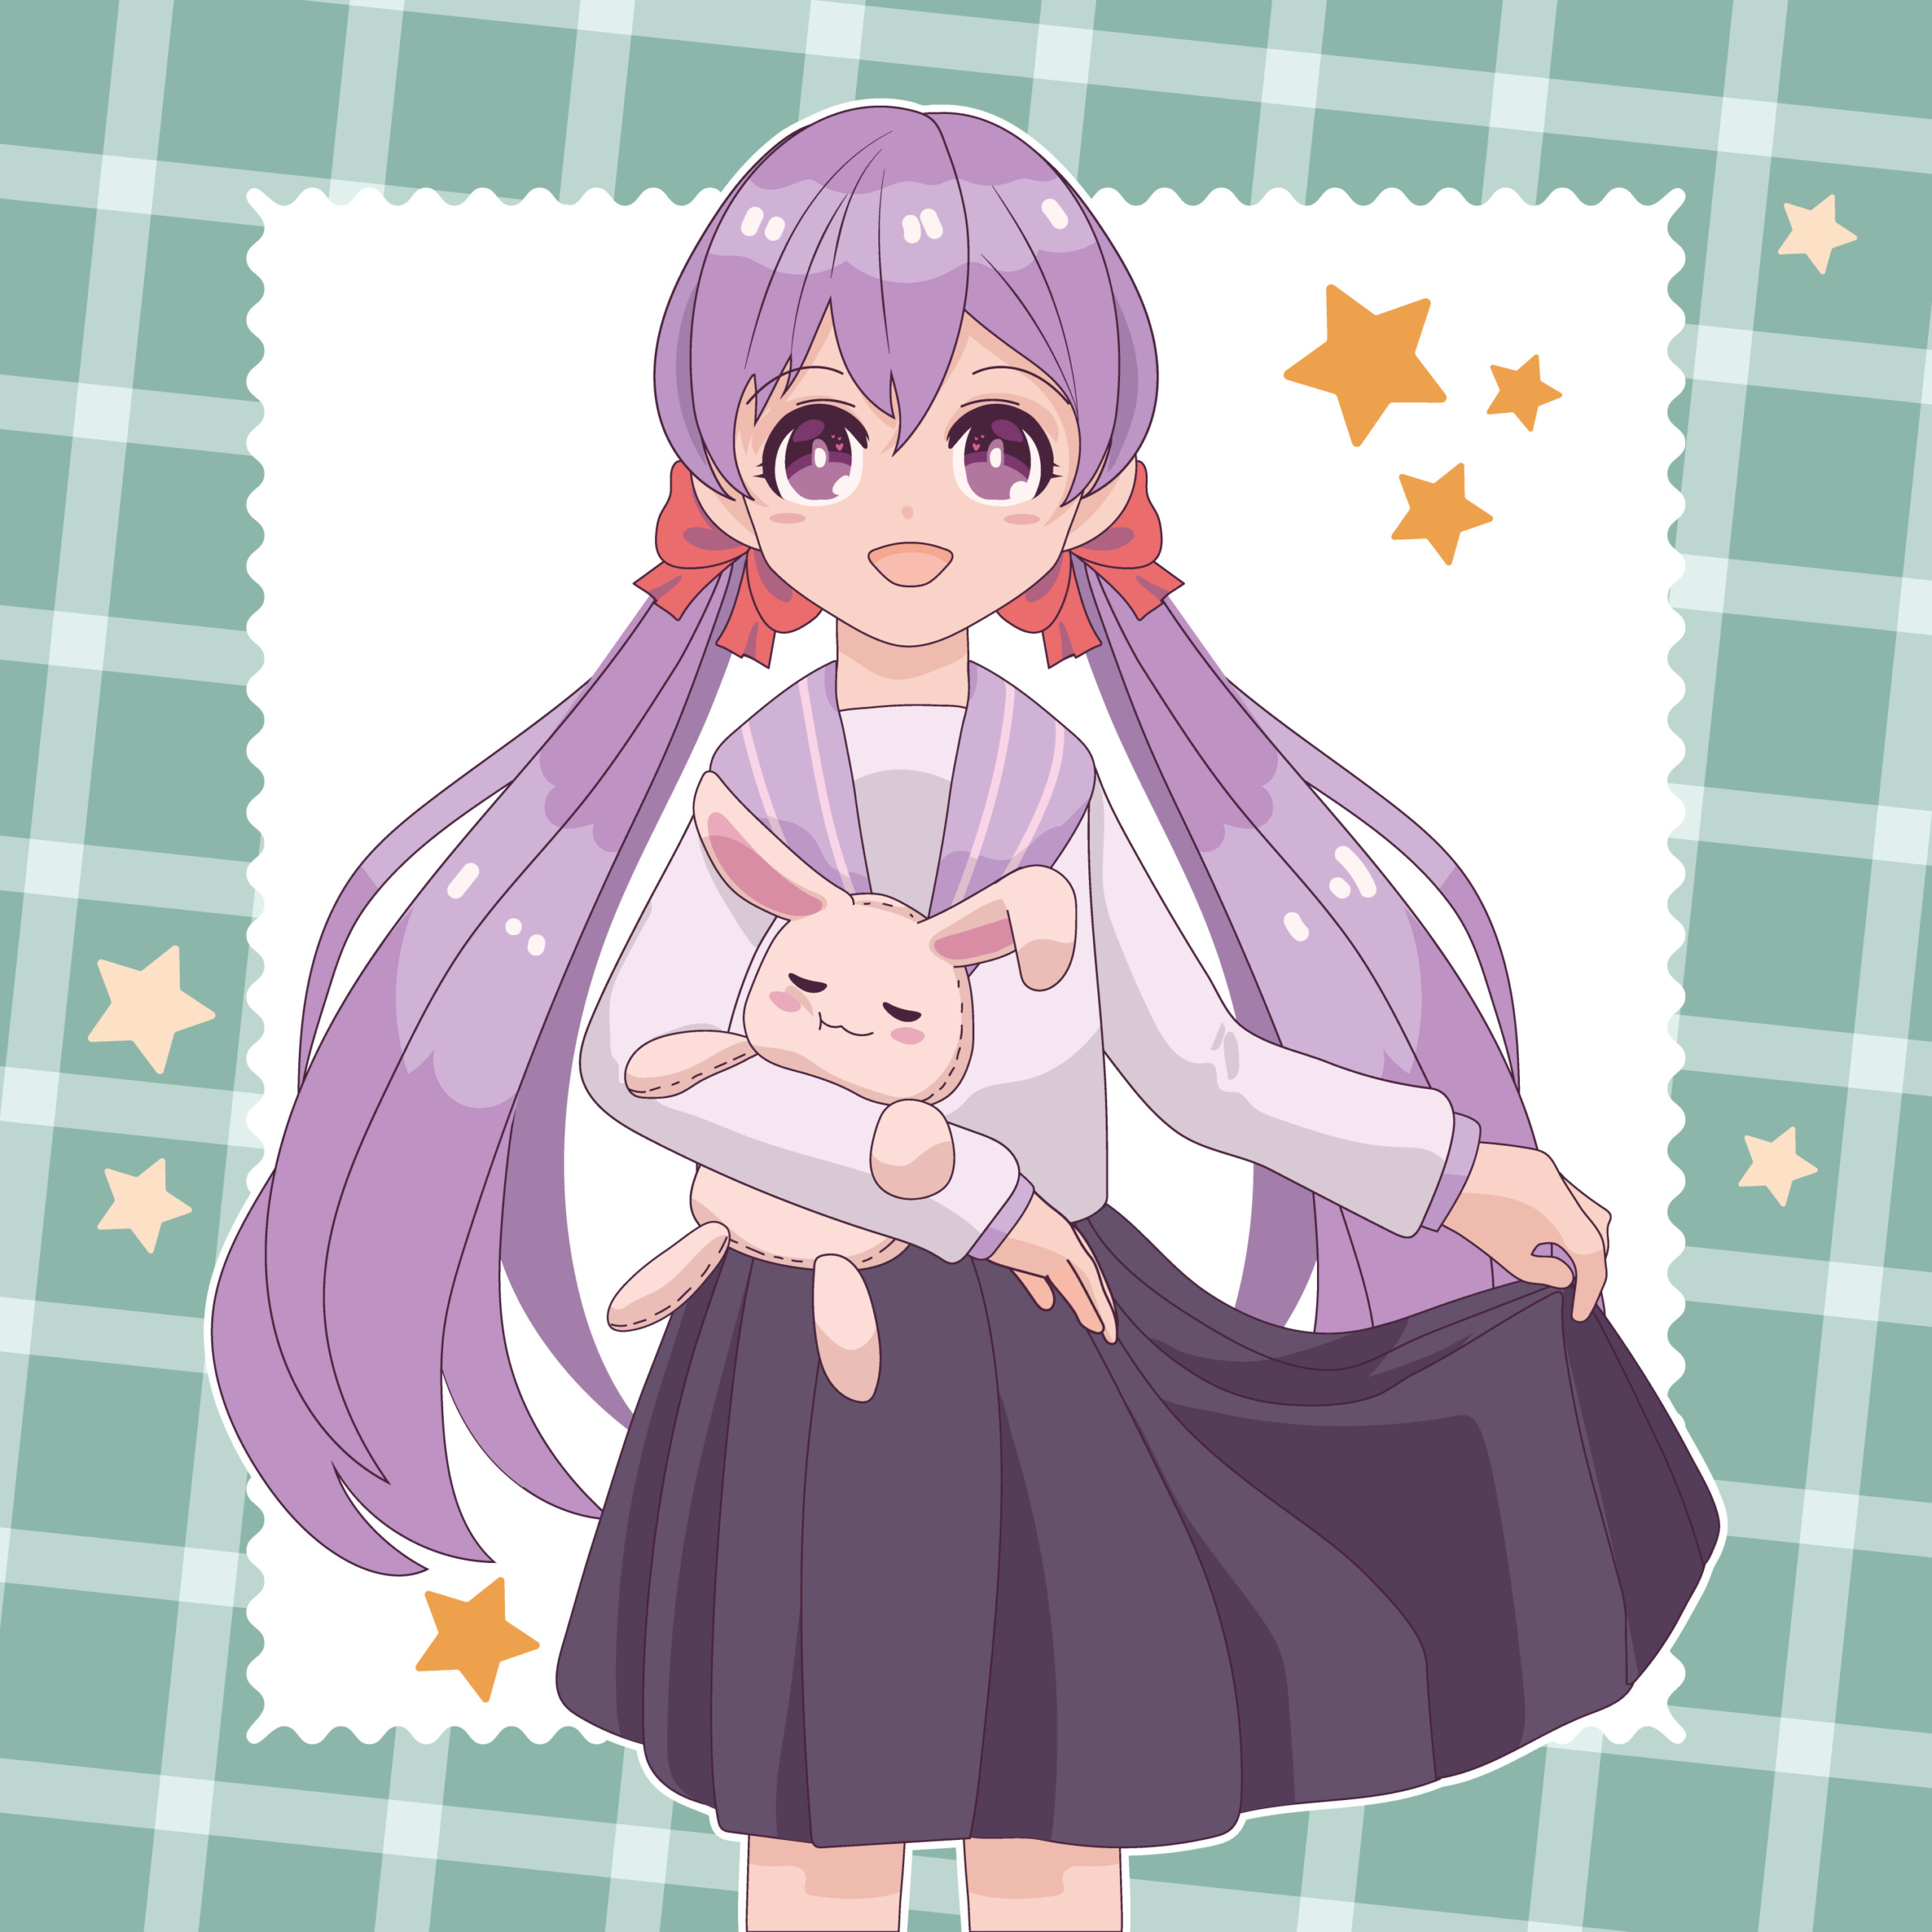 Anime Girl With Toy Rabbit - Original image